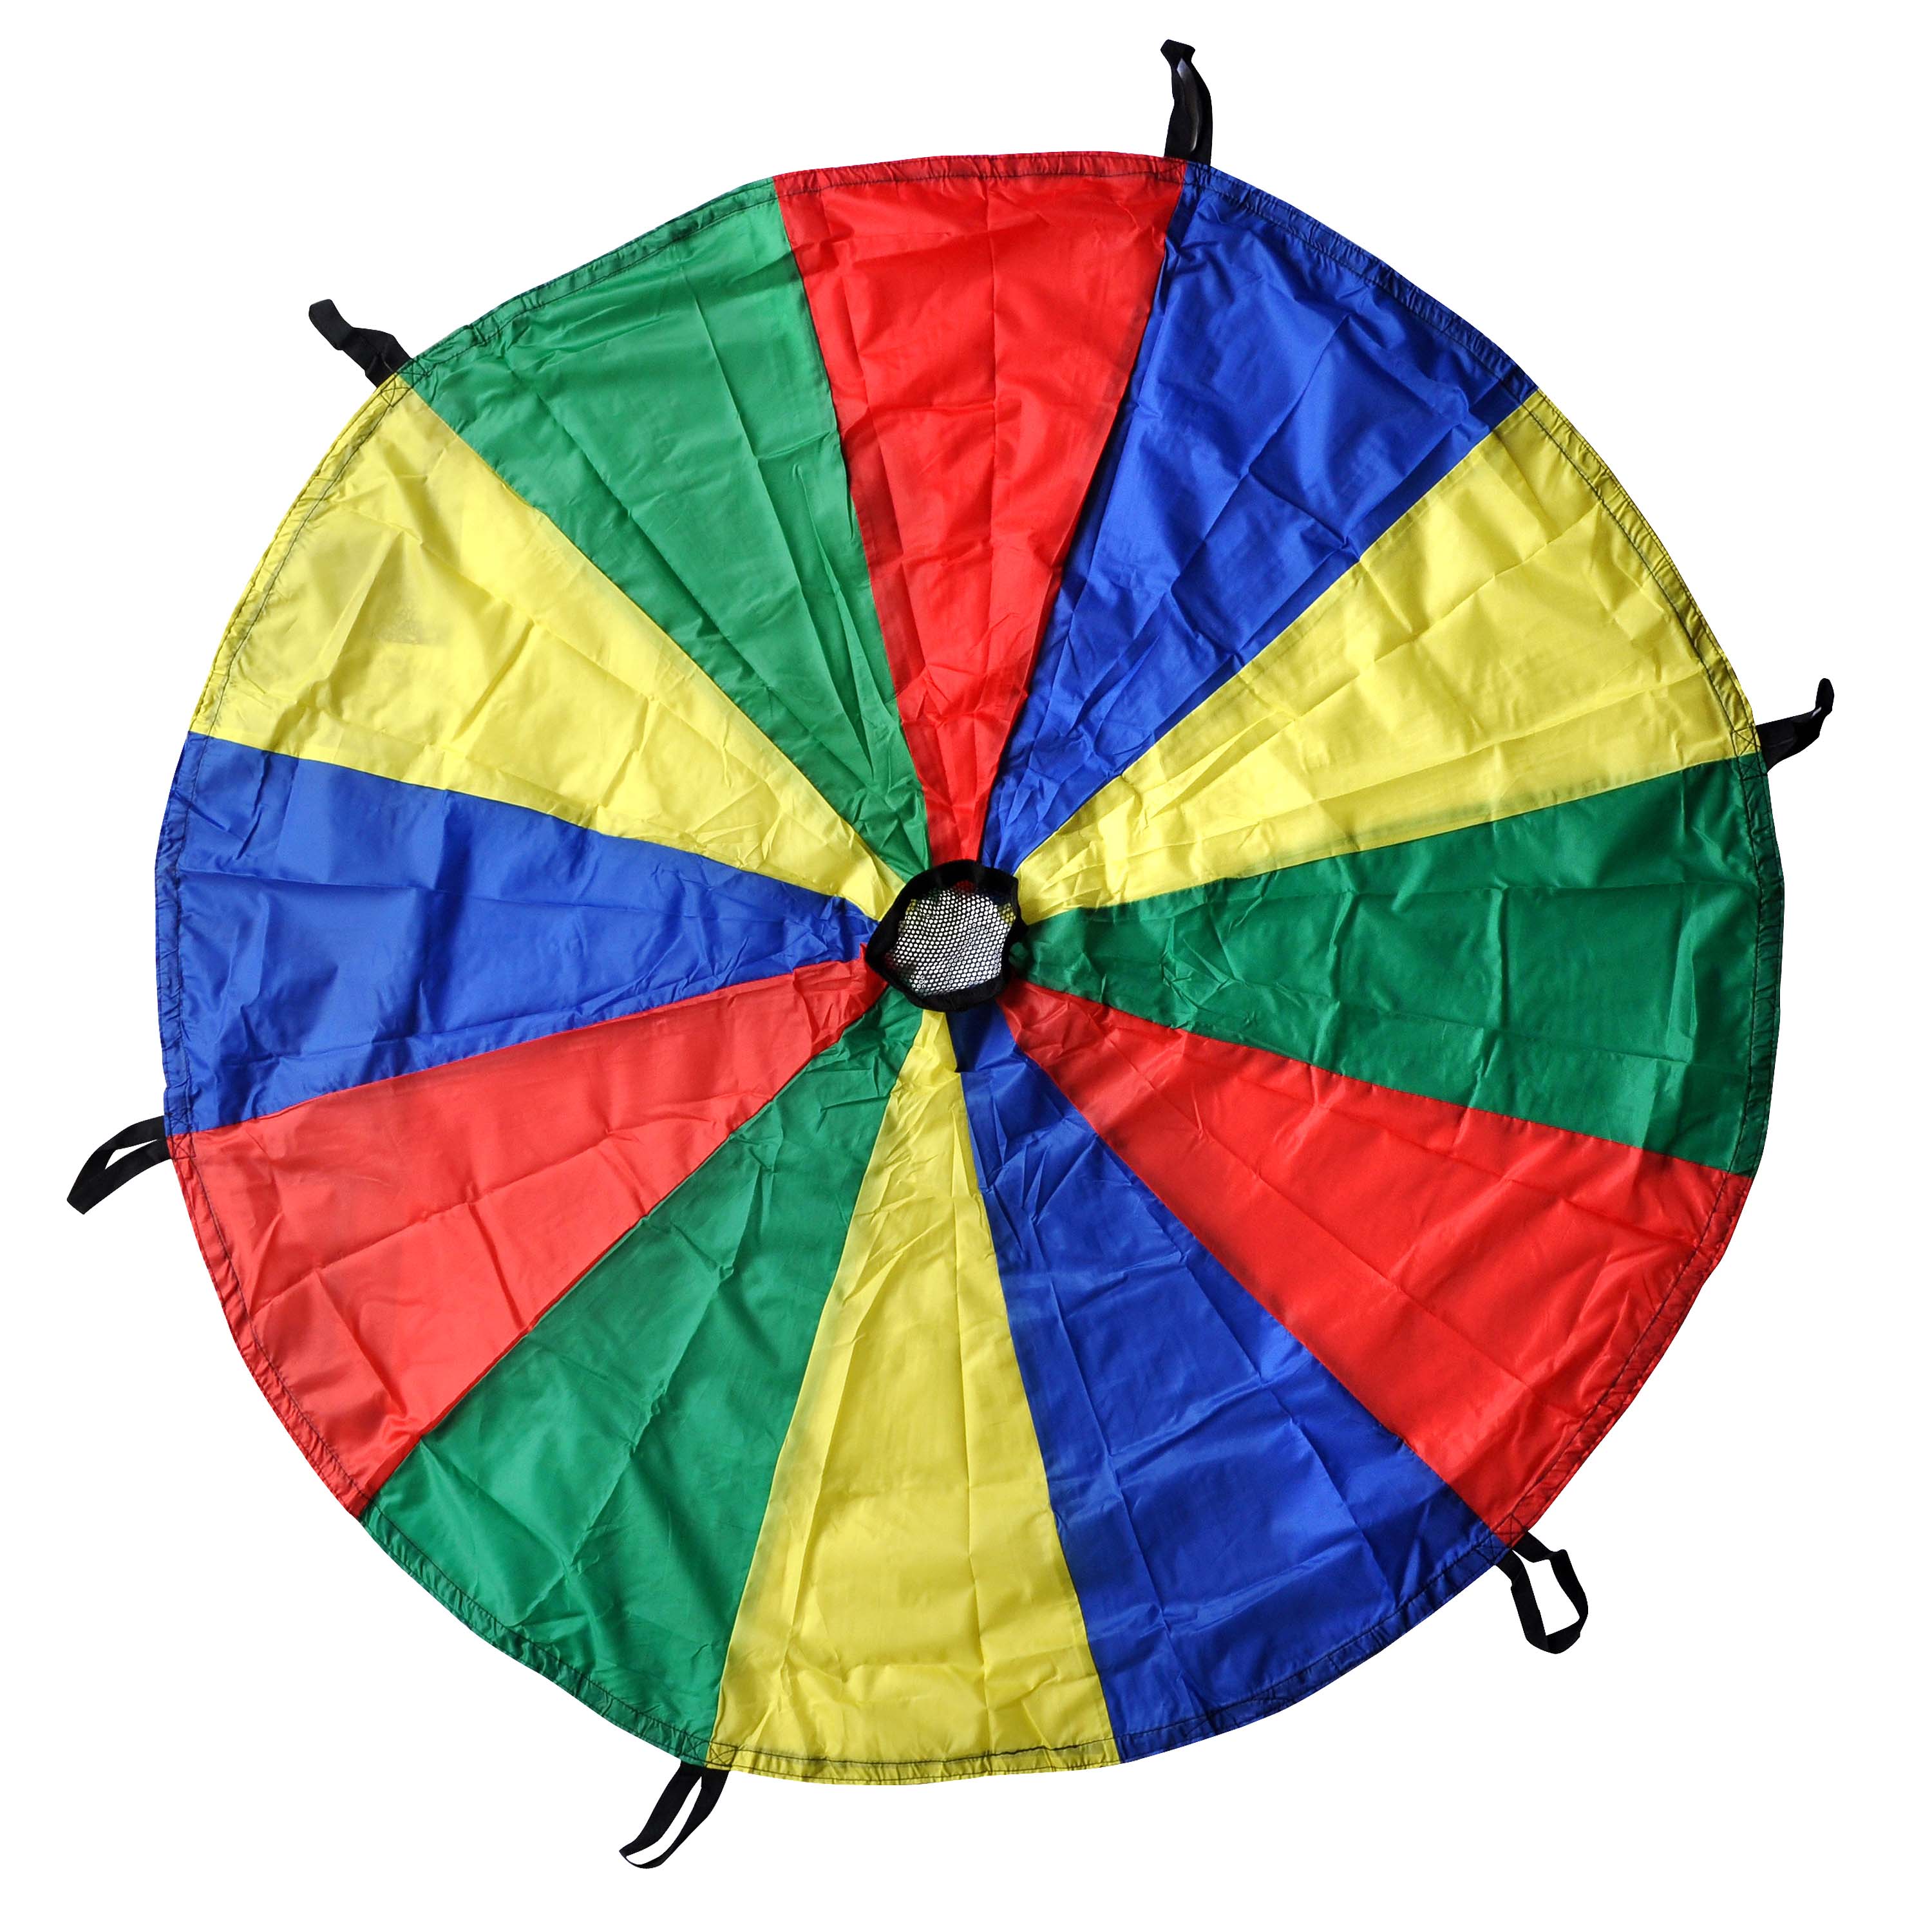 Rainbow Parachute